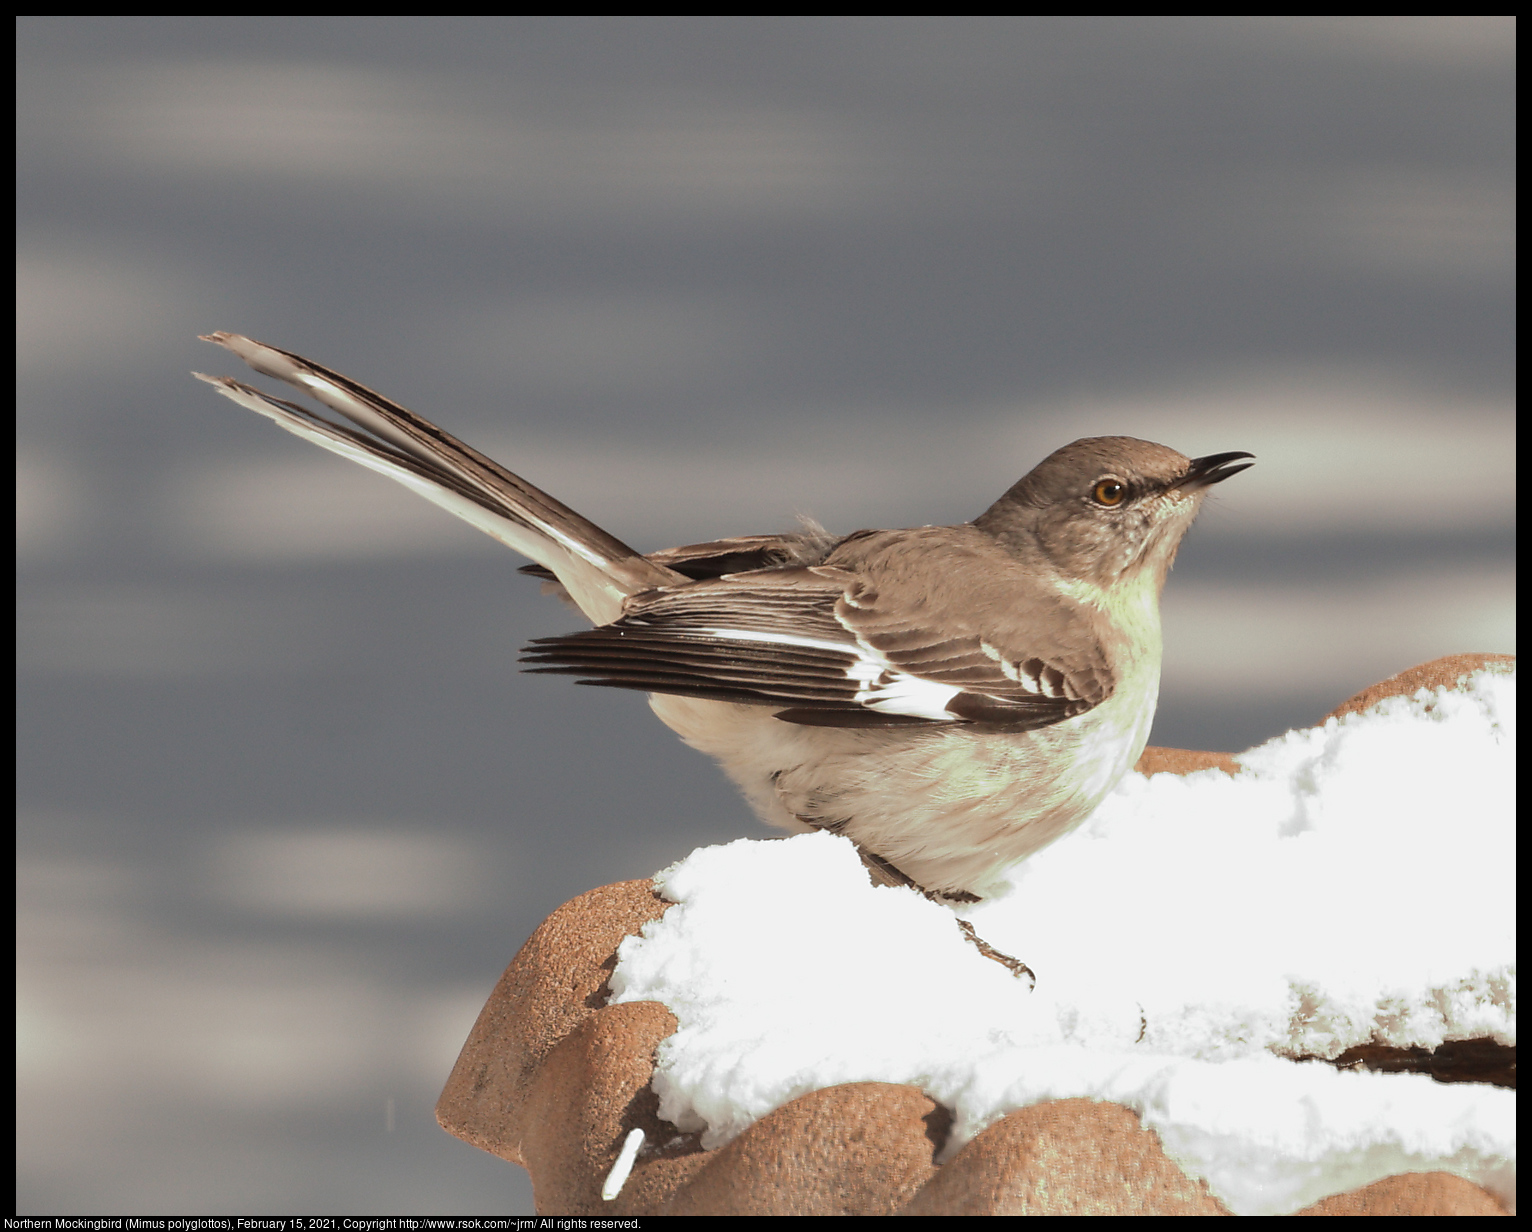 Northern Mockingbird (Mimus polyglottos), February 15, 2021